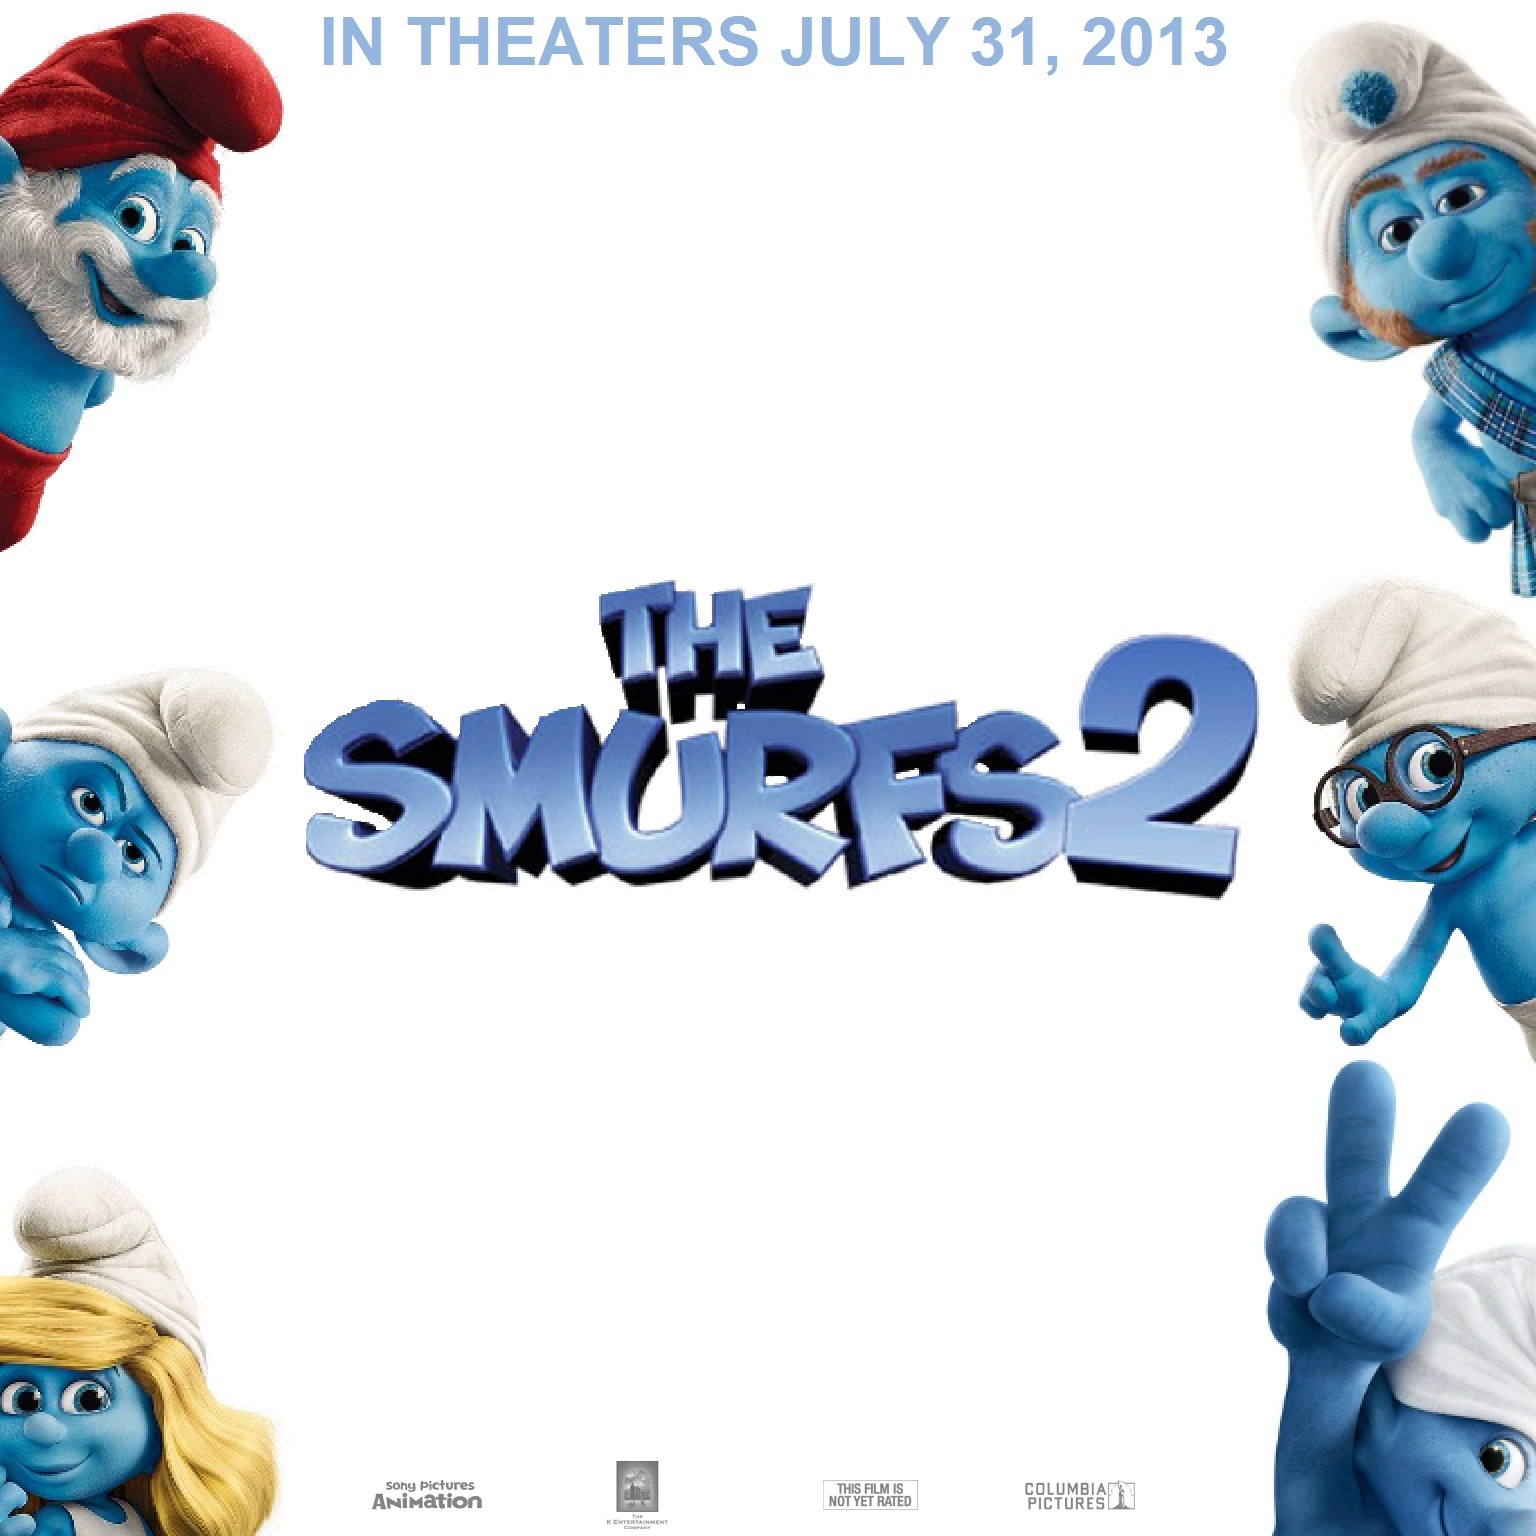 The Smurfs Wallpaper Background Desktop